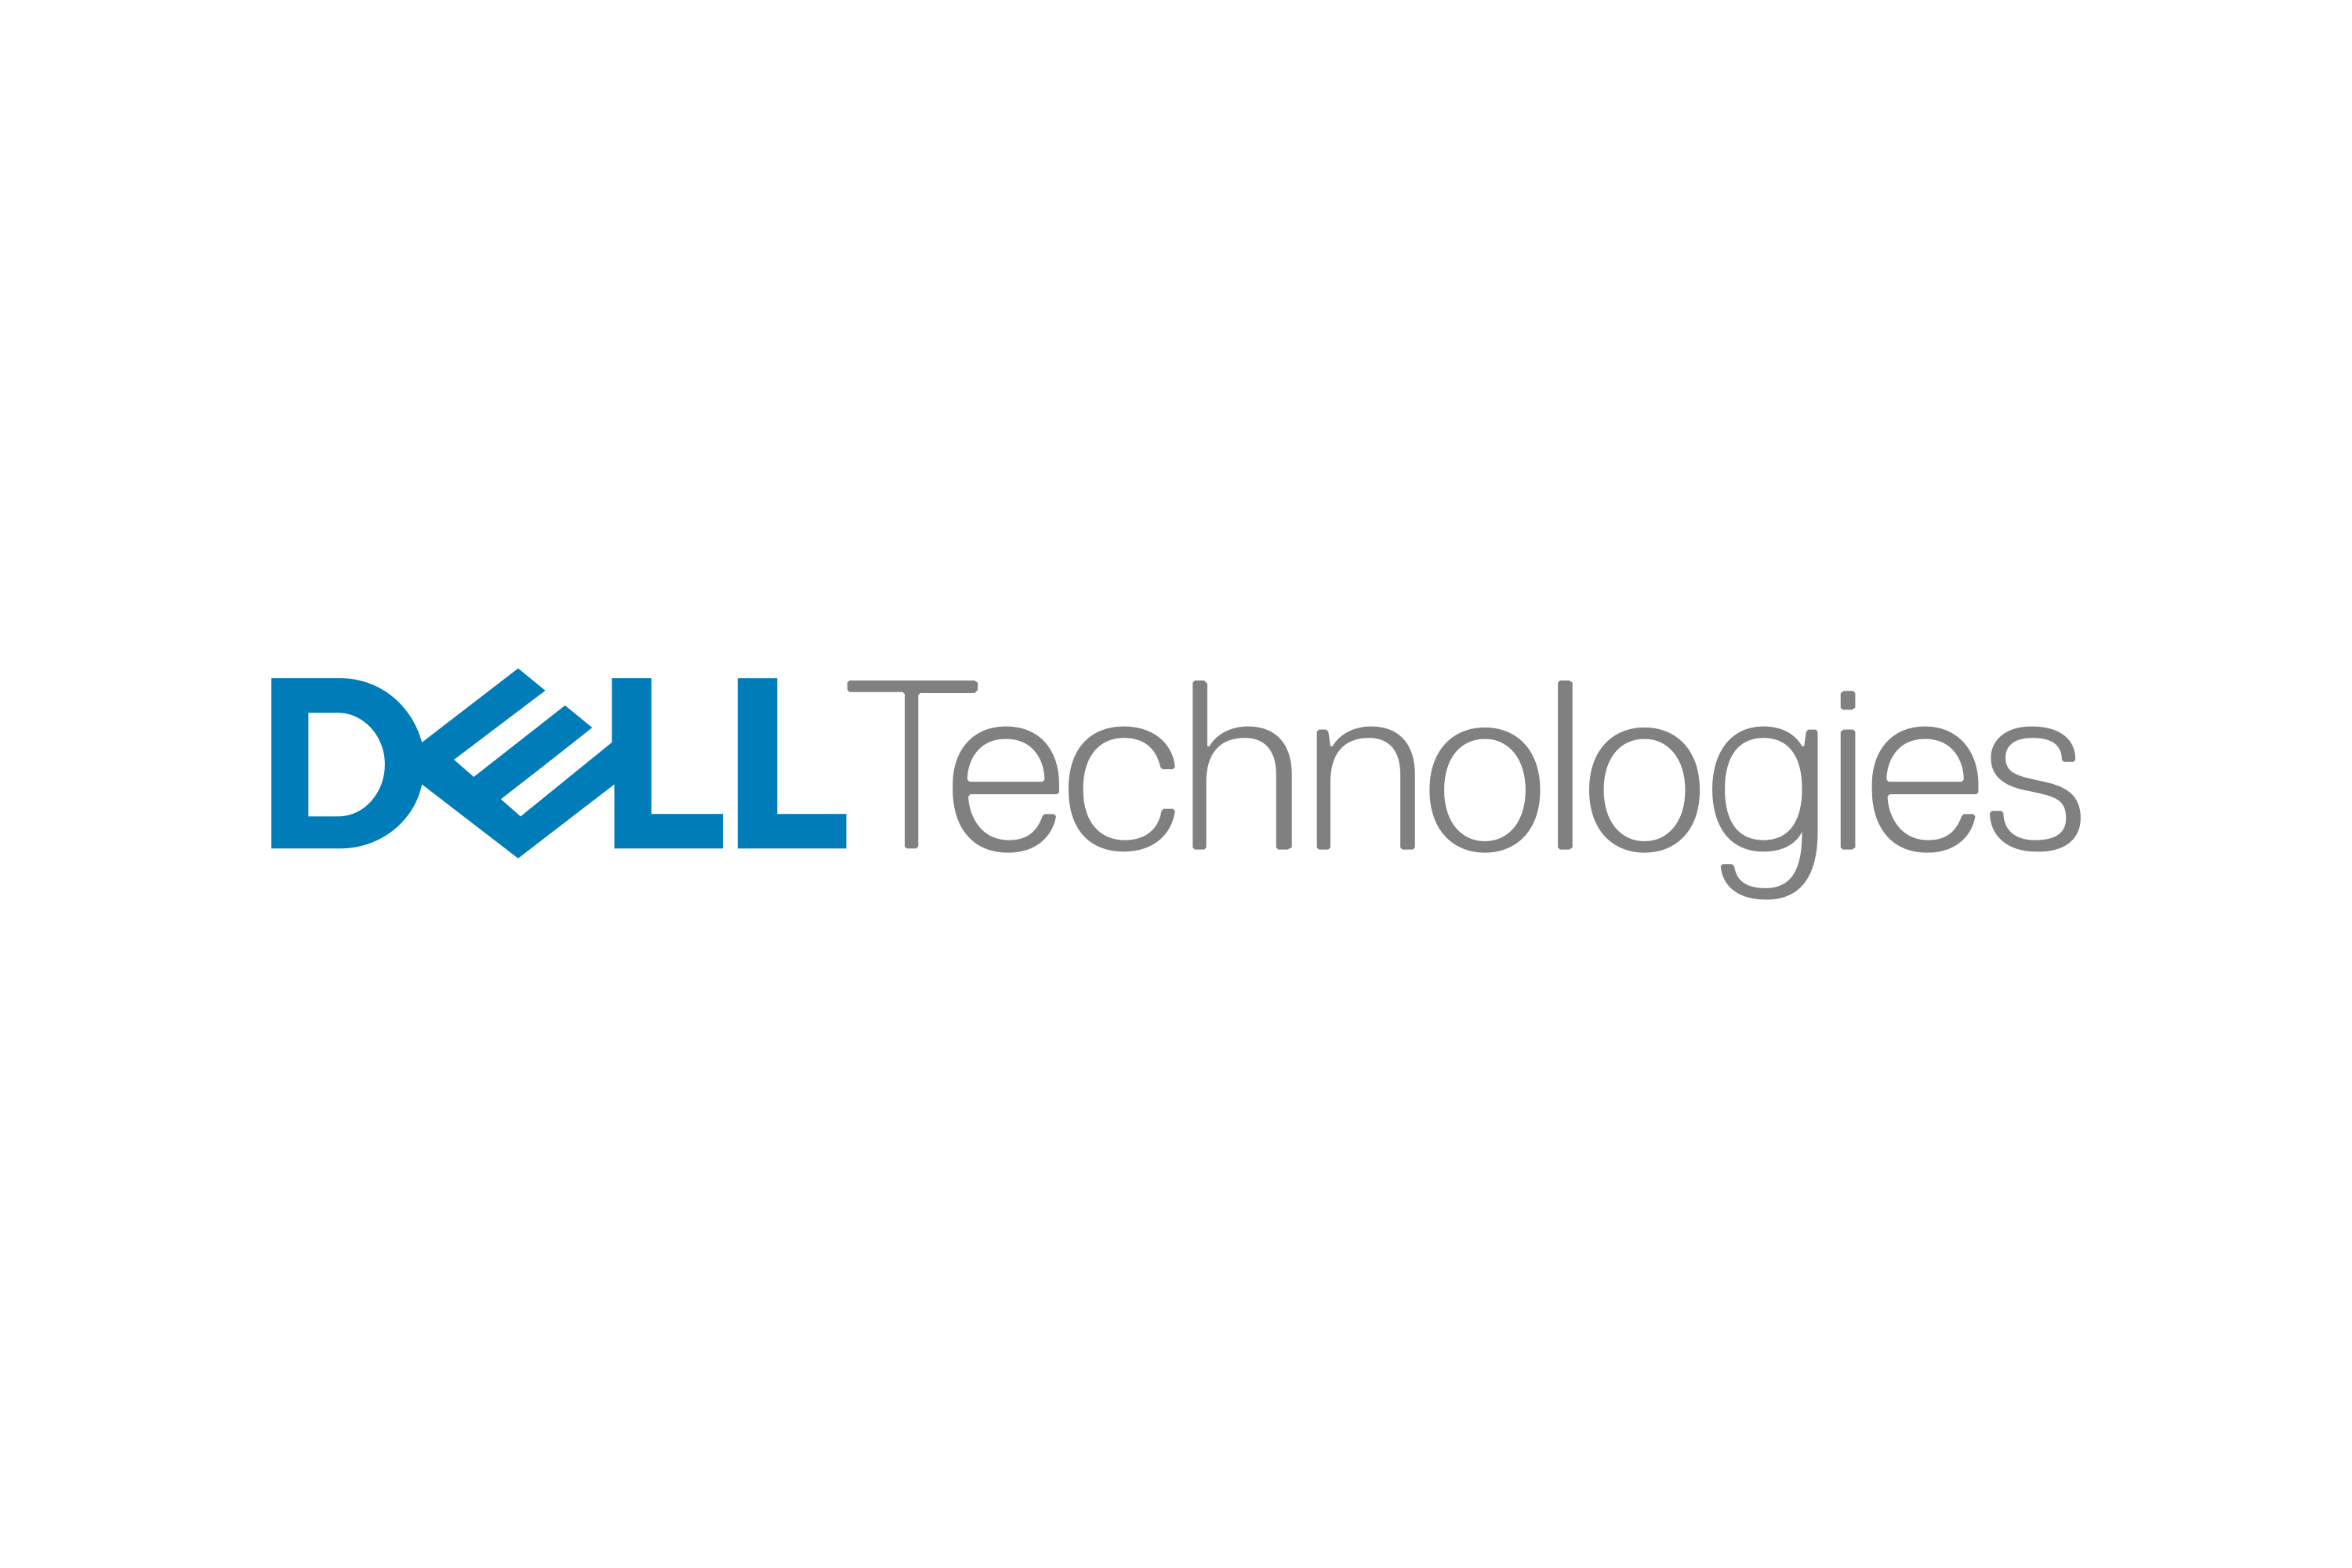 dell technologies logo svg